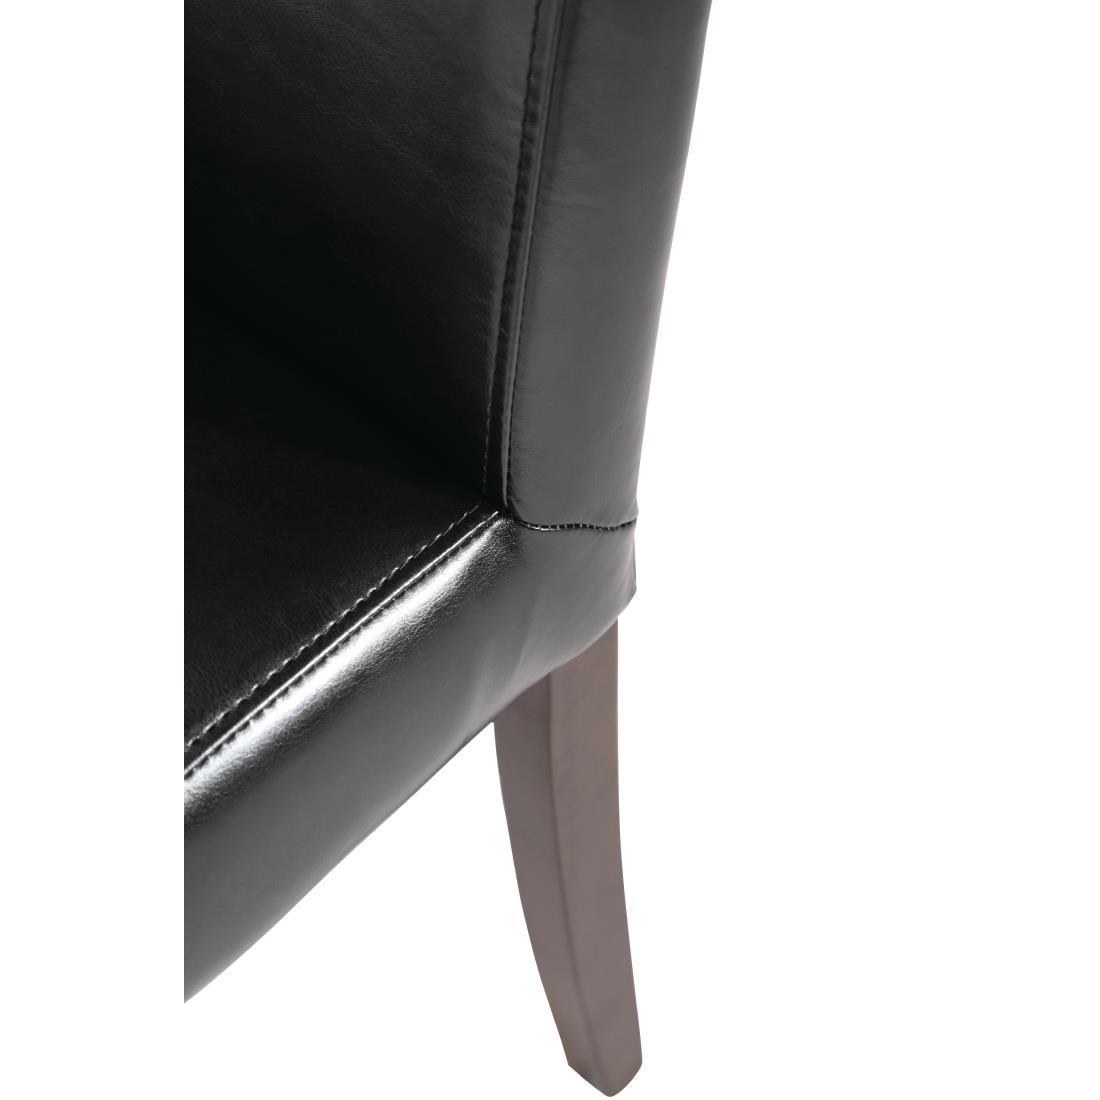 Bolero Faux Leather Dining Chair Black (Box 2) - GF954  - 5